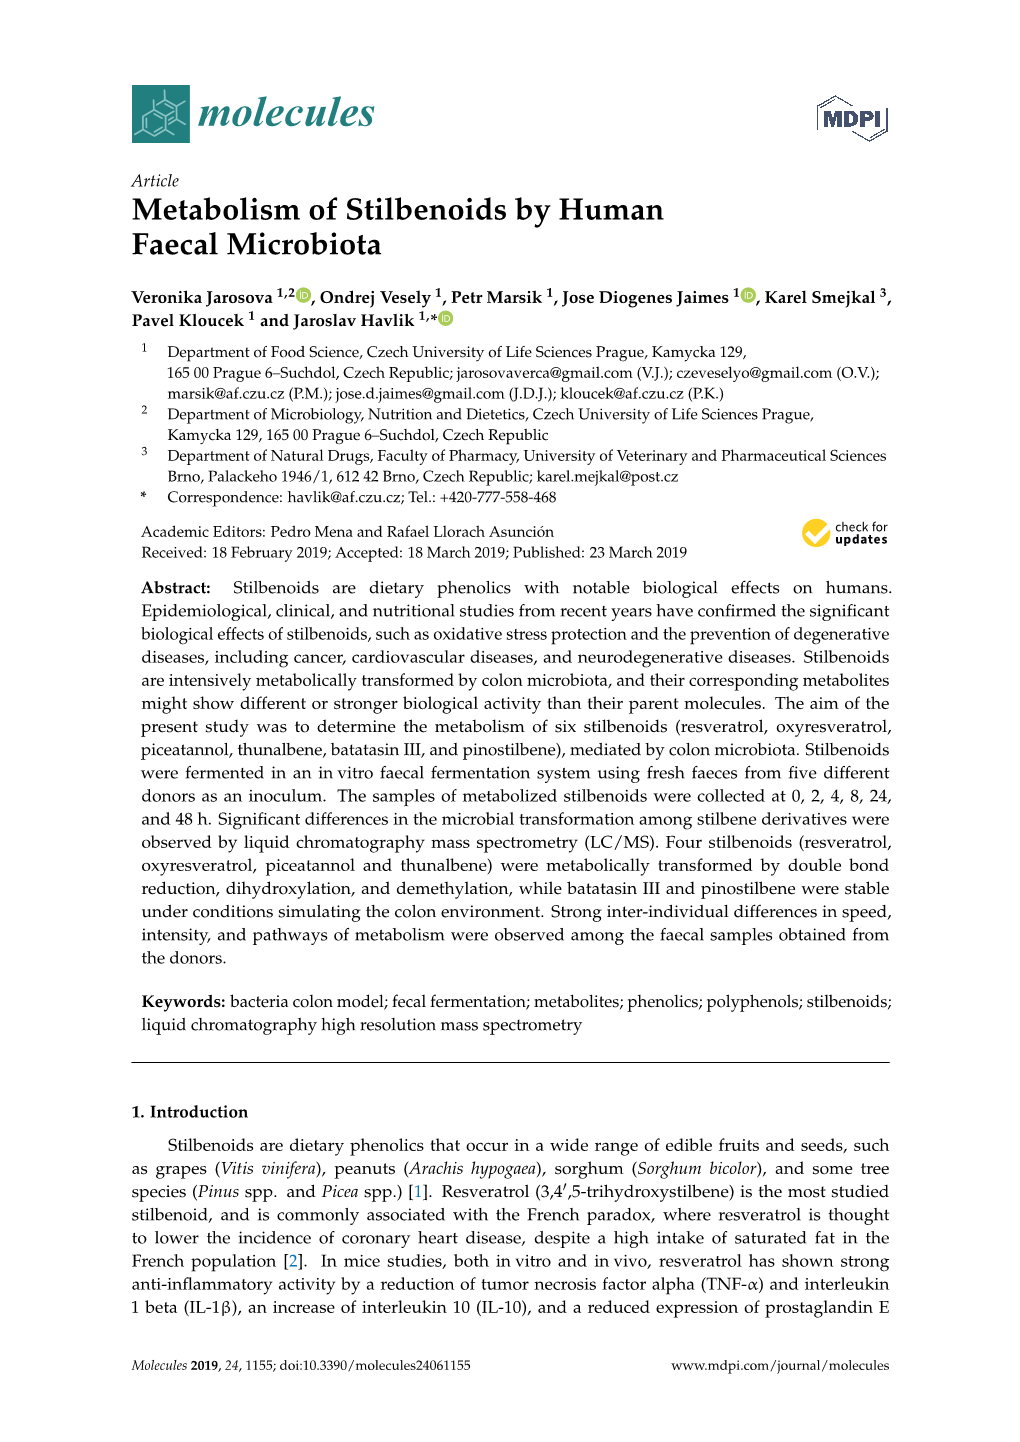 Metabolism of Stilbenoids by Human Faecal Microbiota